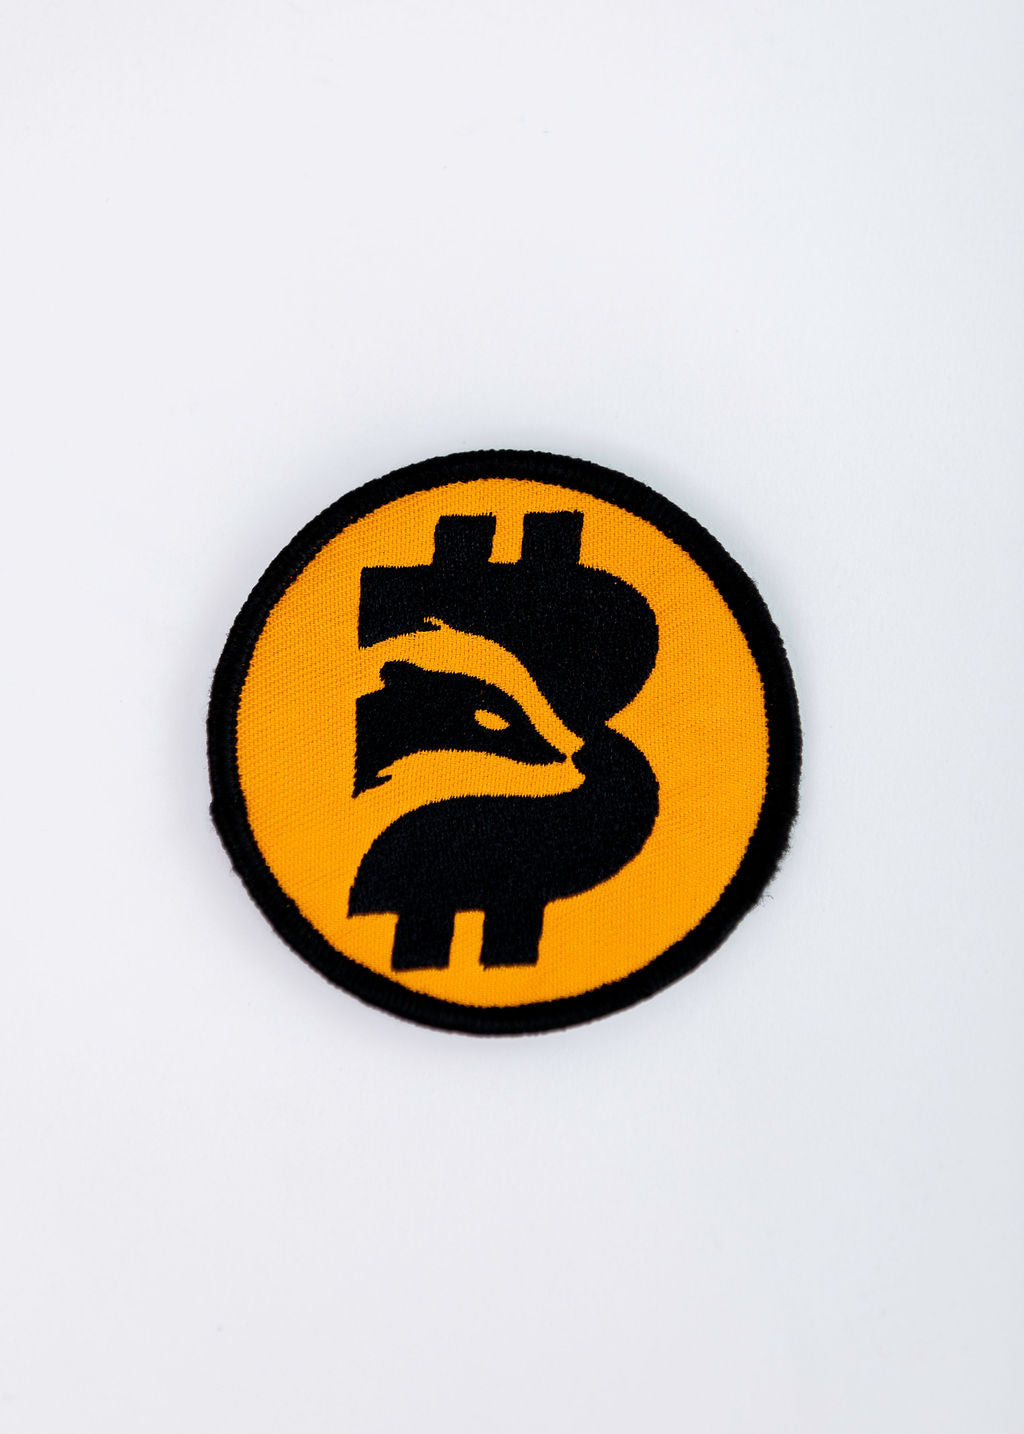 Honey Badger Bitcoin Patch